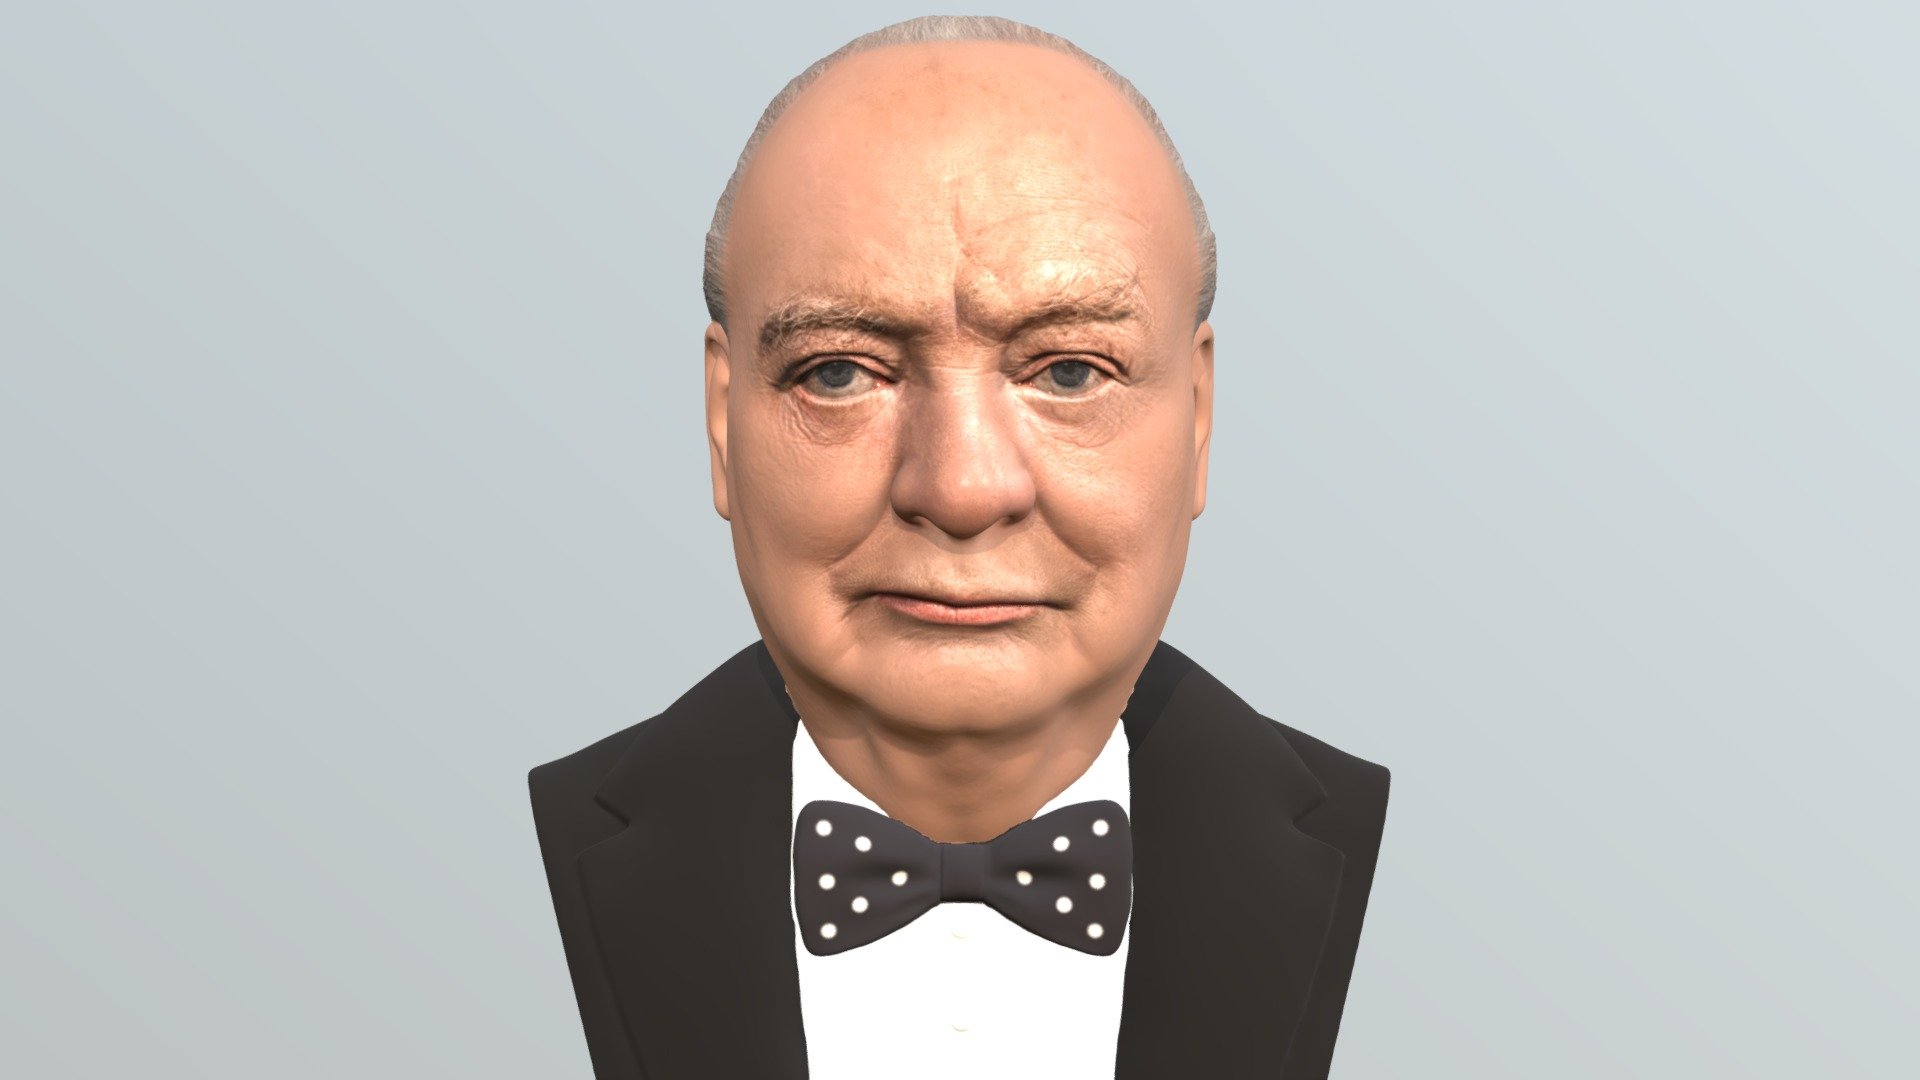 Winston Churchill bust full color 3D printing